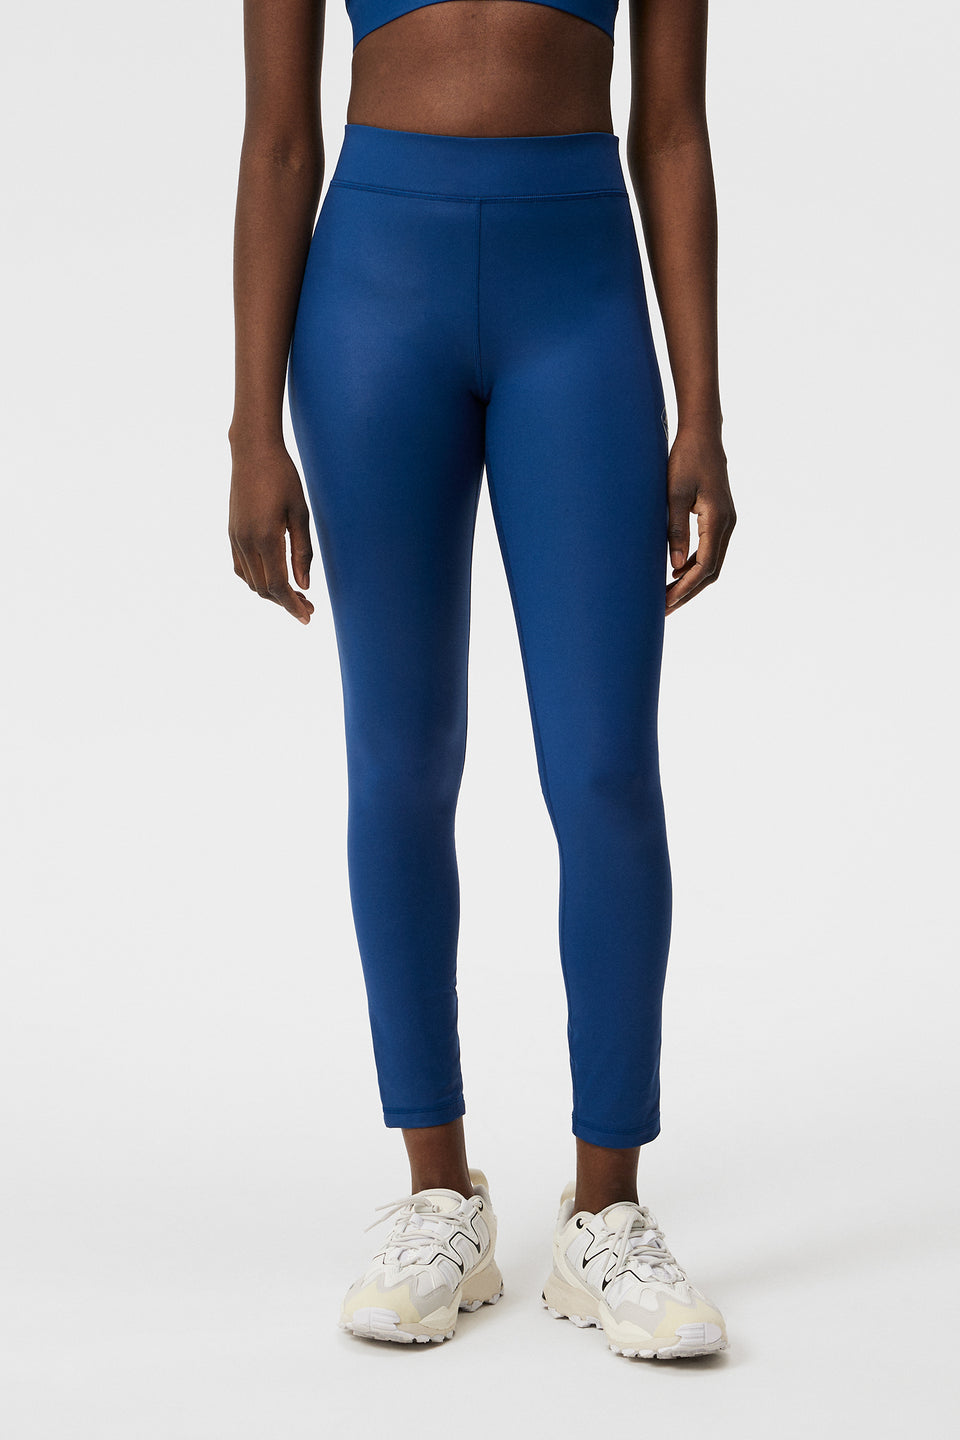 Nike Dri-fit Flex Bliss Luxe Training Pants, Navy Blue